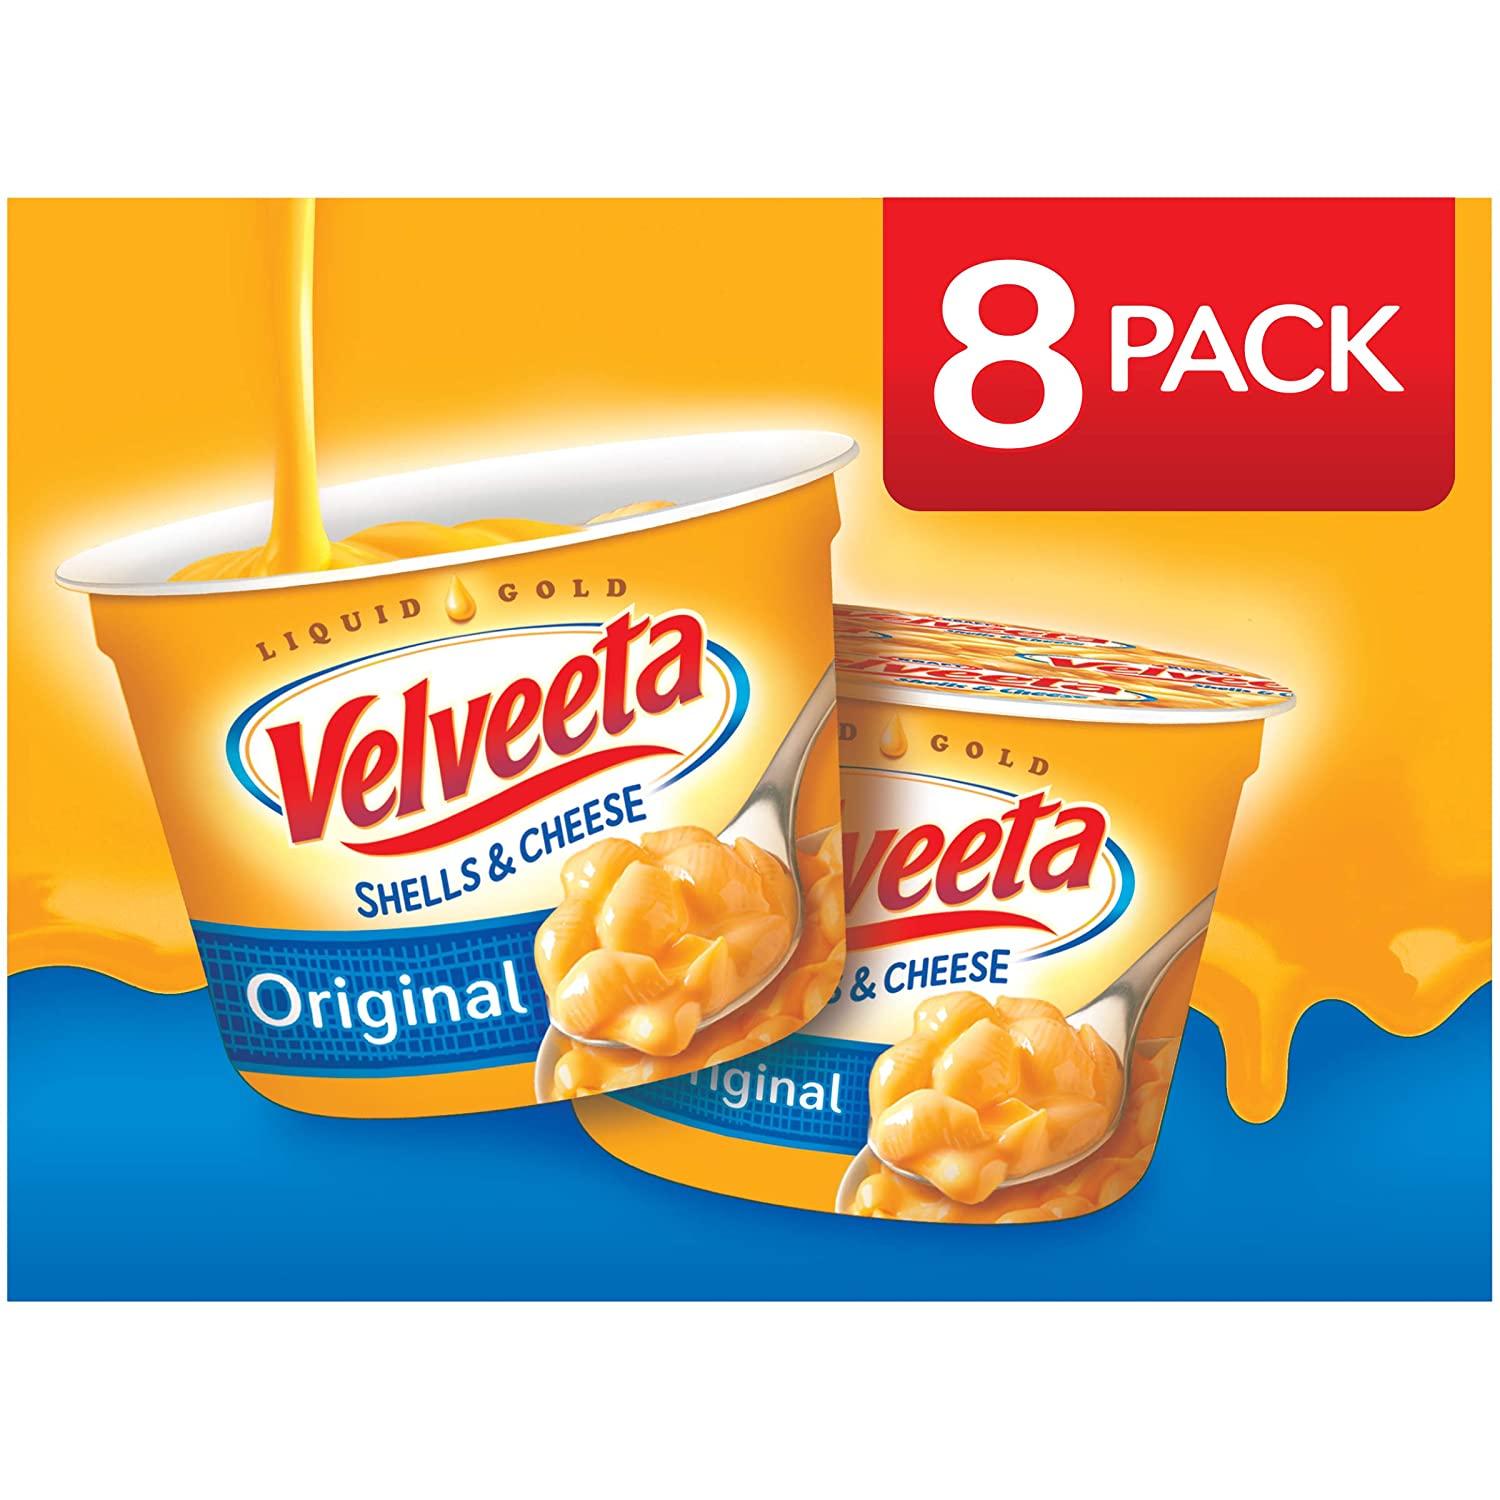 8 Velveeta Shells & Cheese Single Serve Pasta Cups for $4.84 Shipped